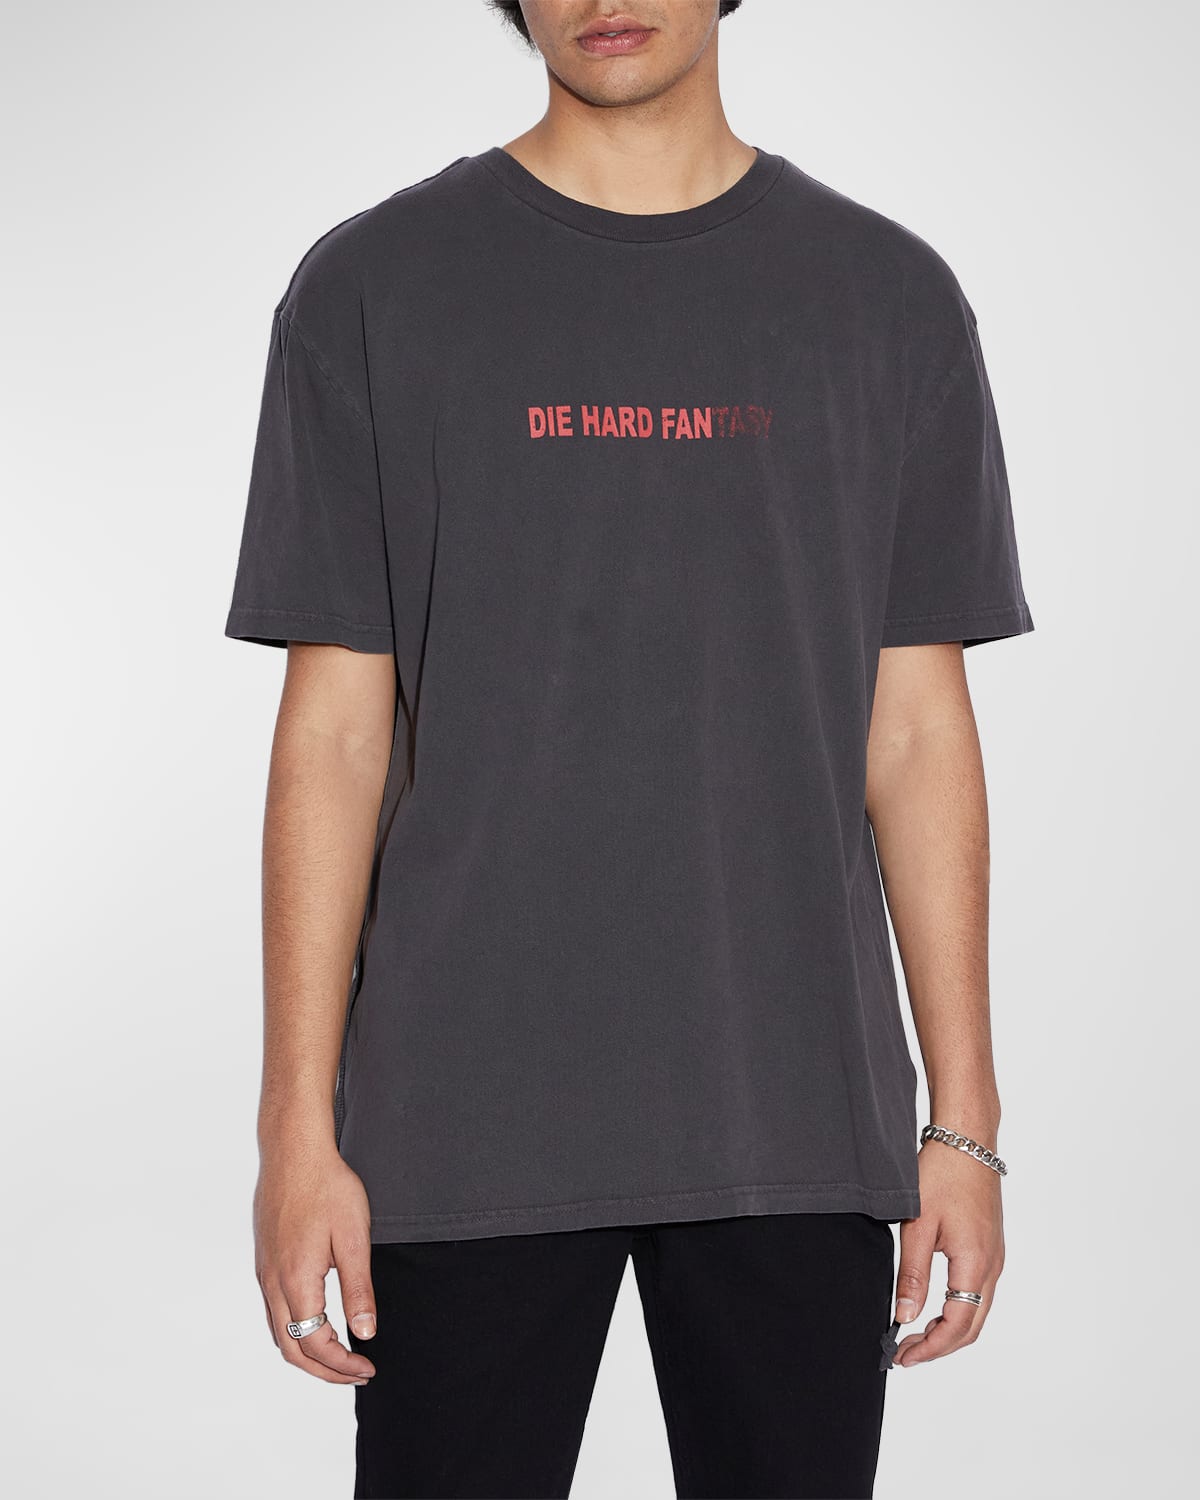 Ksubi Men's Die Hard Fantasy Faded Biggie T-Shirt